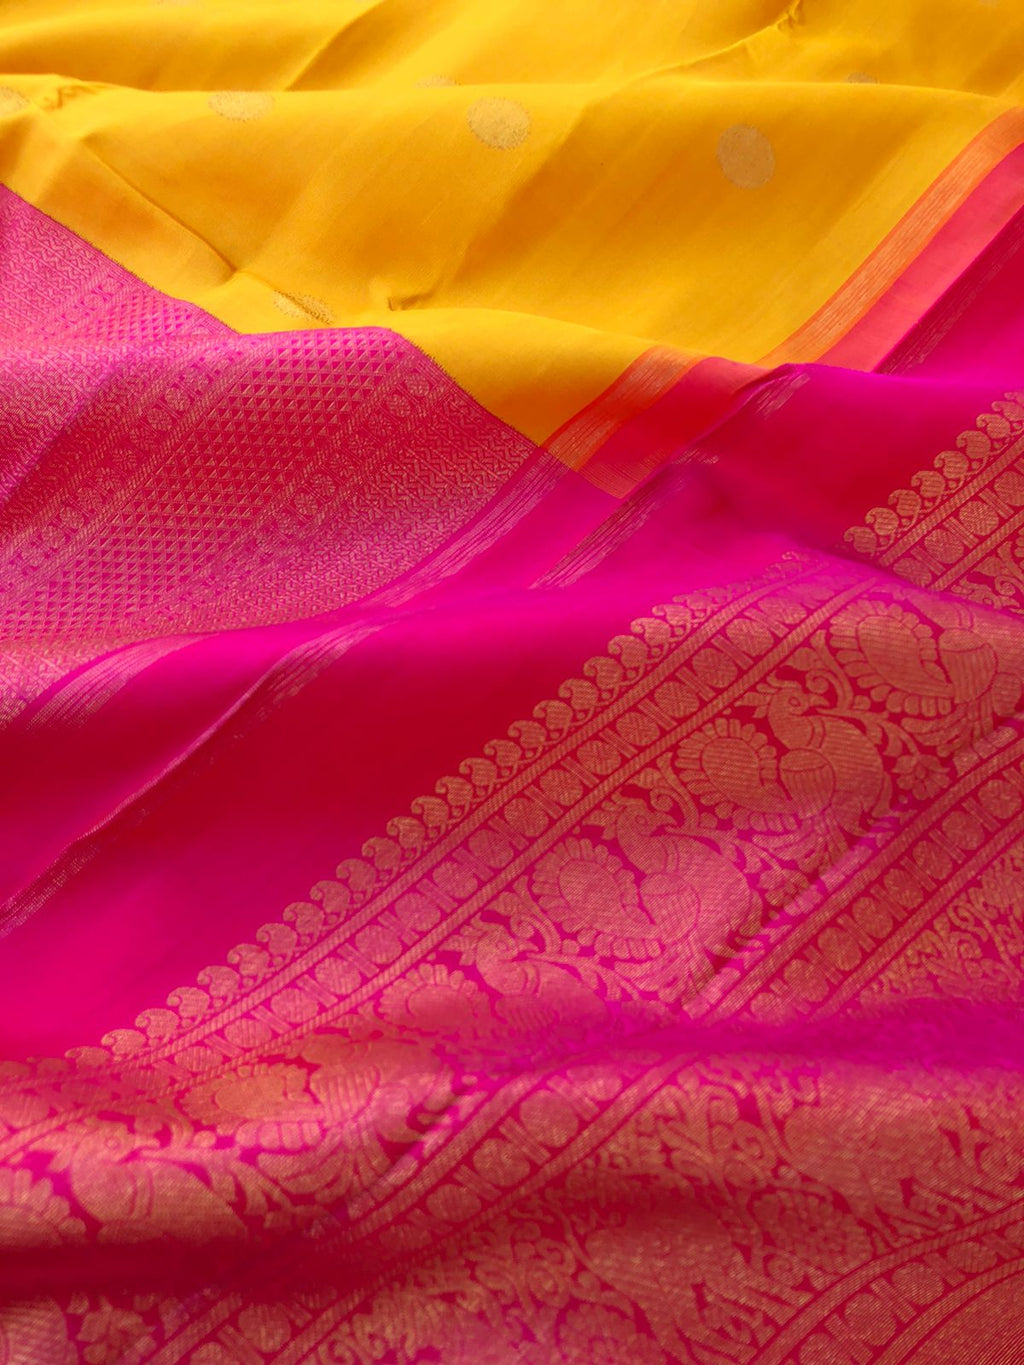 Leela - Legacy Of Kanchivarams - most beautiful aarai bagam ( that is a perfect half and half ) Kanchivaram in vibrant yellow and classy pink